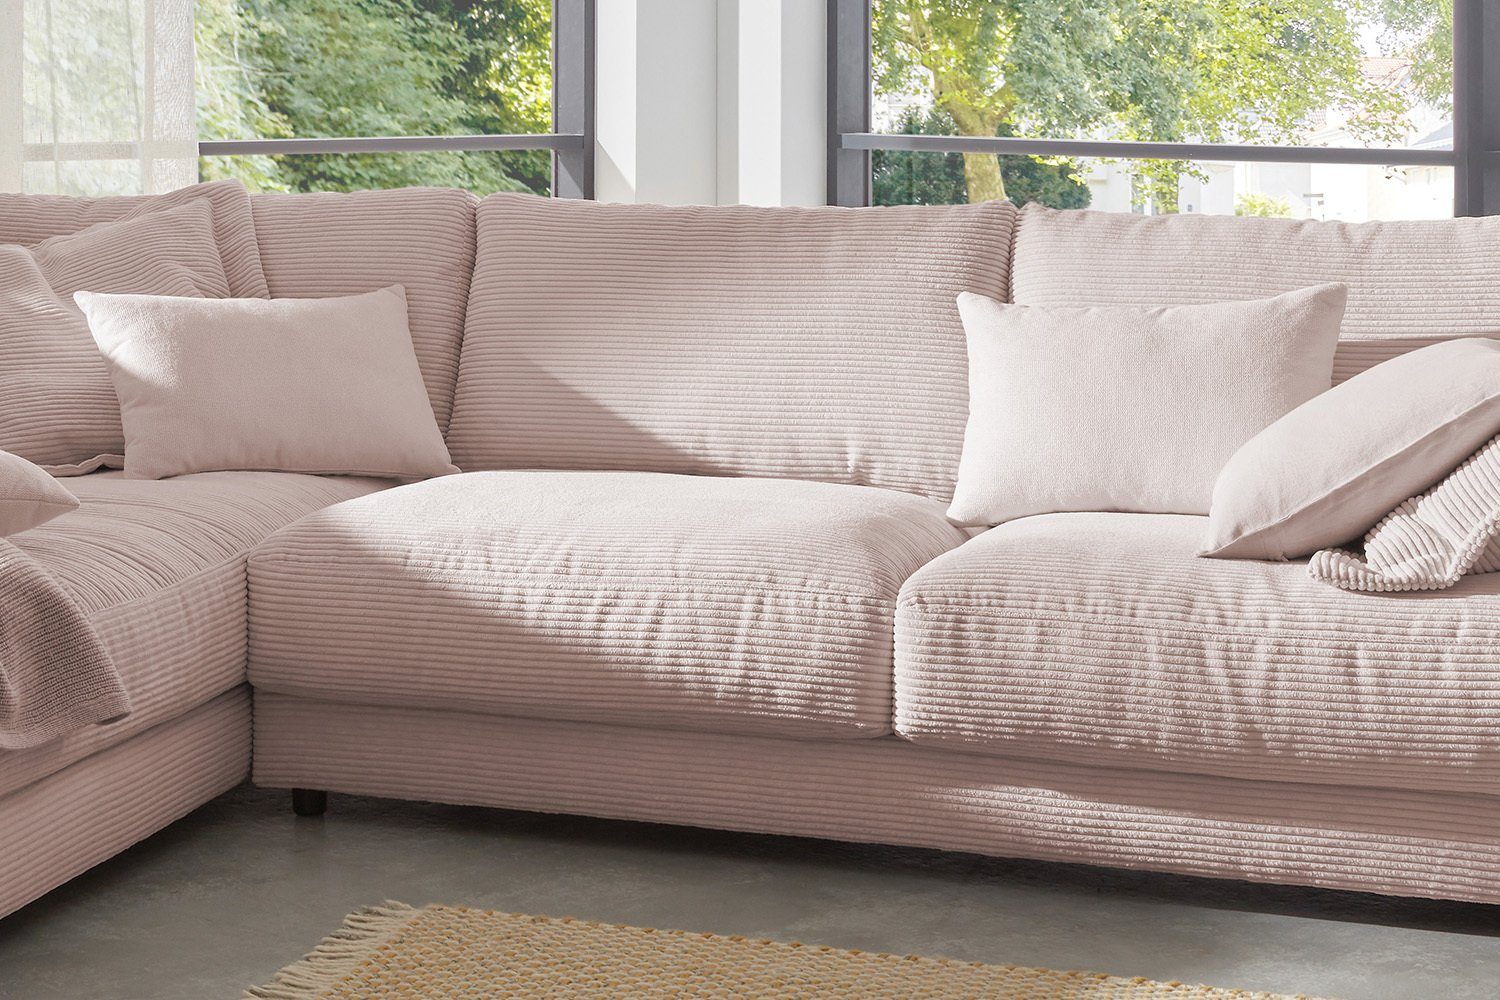 Cord, rechts Recamiere Sofa rosa versch. MADELINE, Ecksofa od. KAWOLA Farben links,